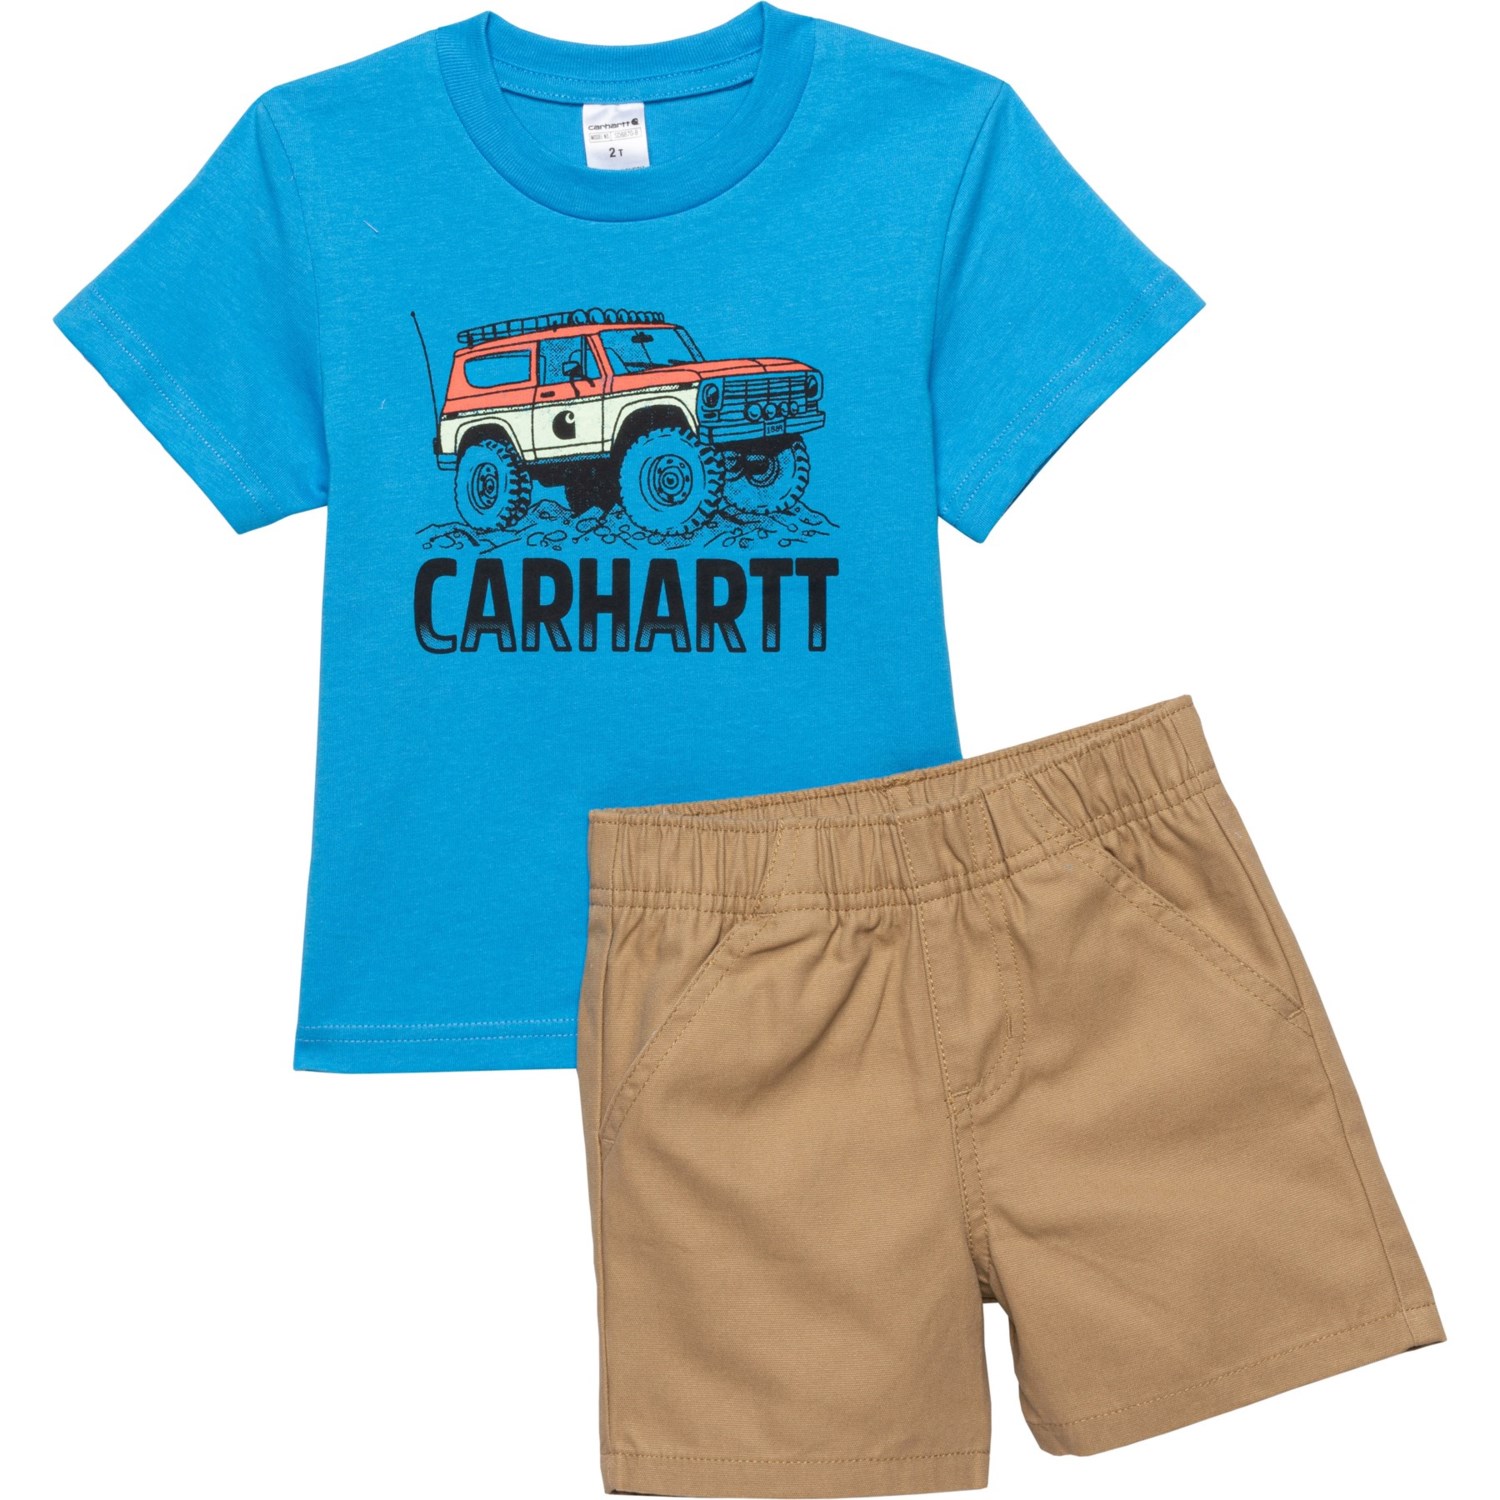 Carhartt Toddler Boys CG8870 Off-Road T-Shirt and Canvas Shorts